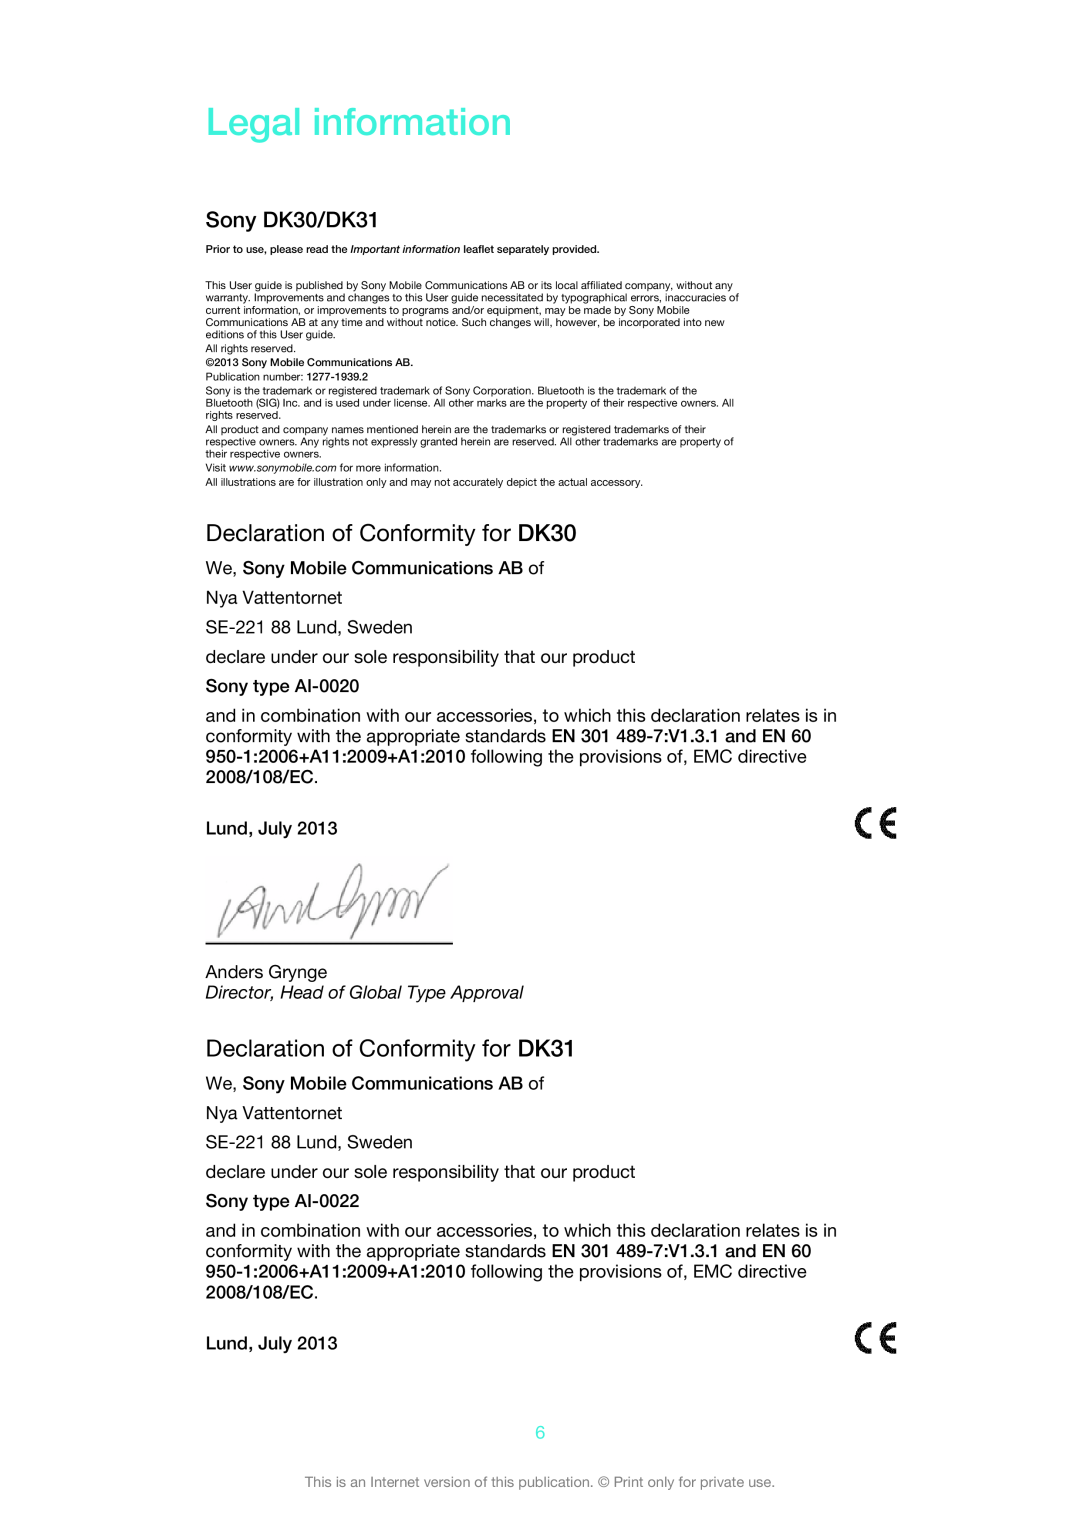 Sony manual Legal information, Declaration of Conformity for DK30, Declaration of Conformity for DK31, Sony DK30/DK31 